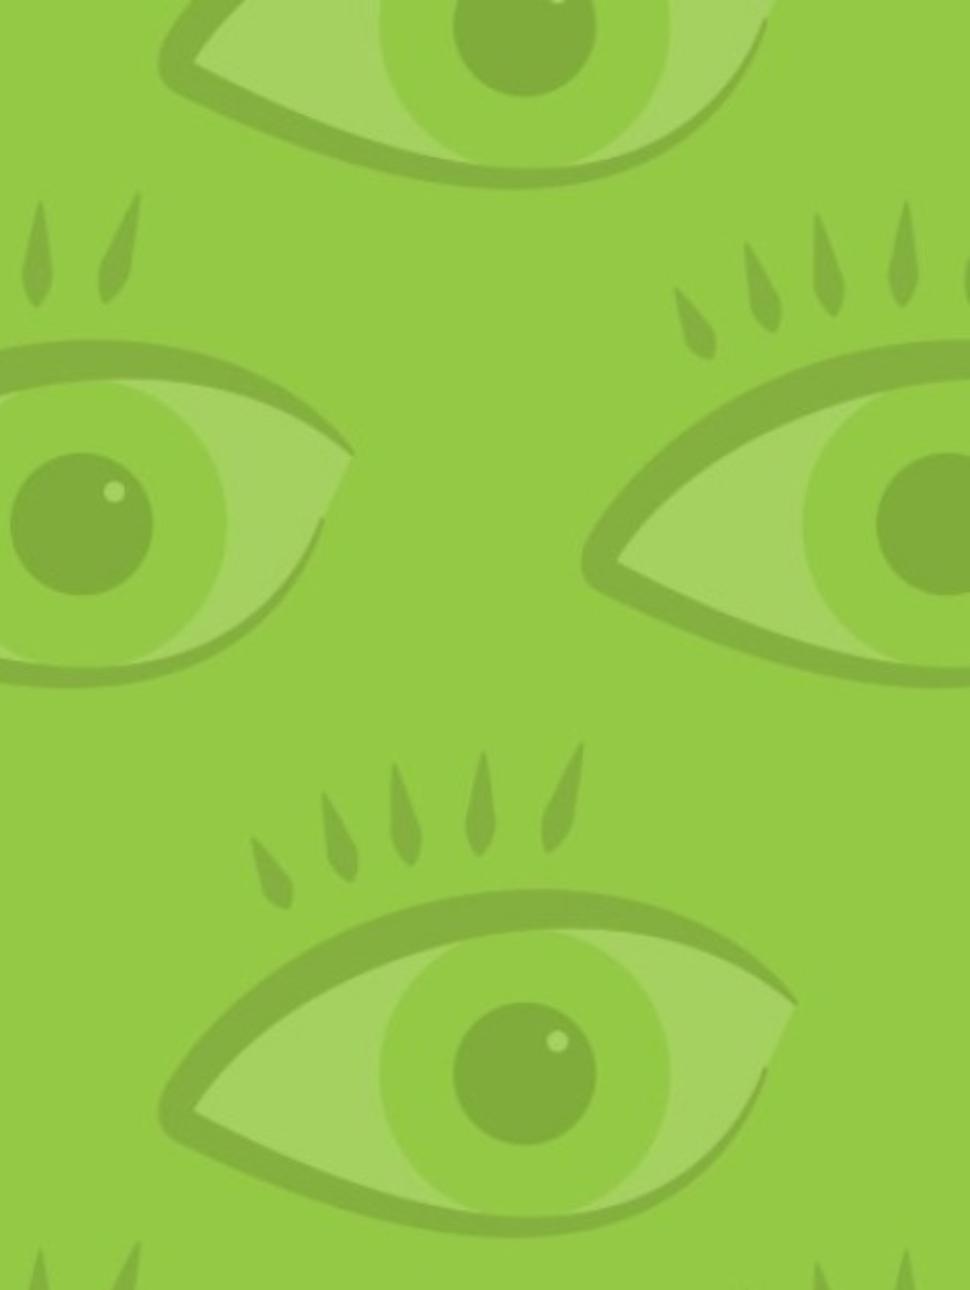 Scicinema print of a green eye repeated